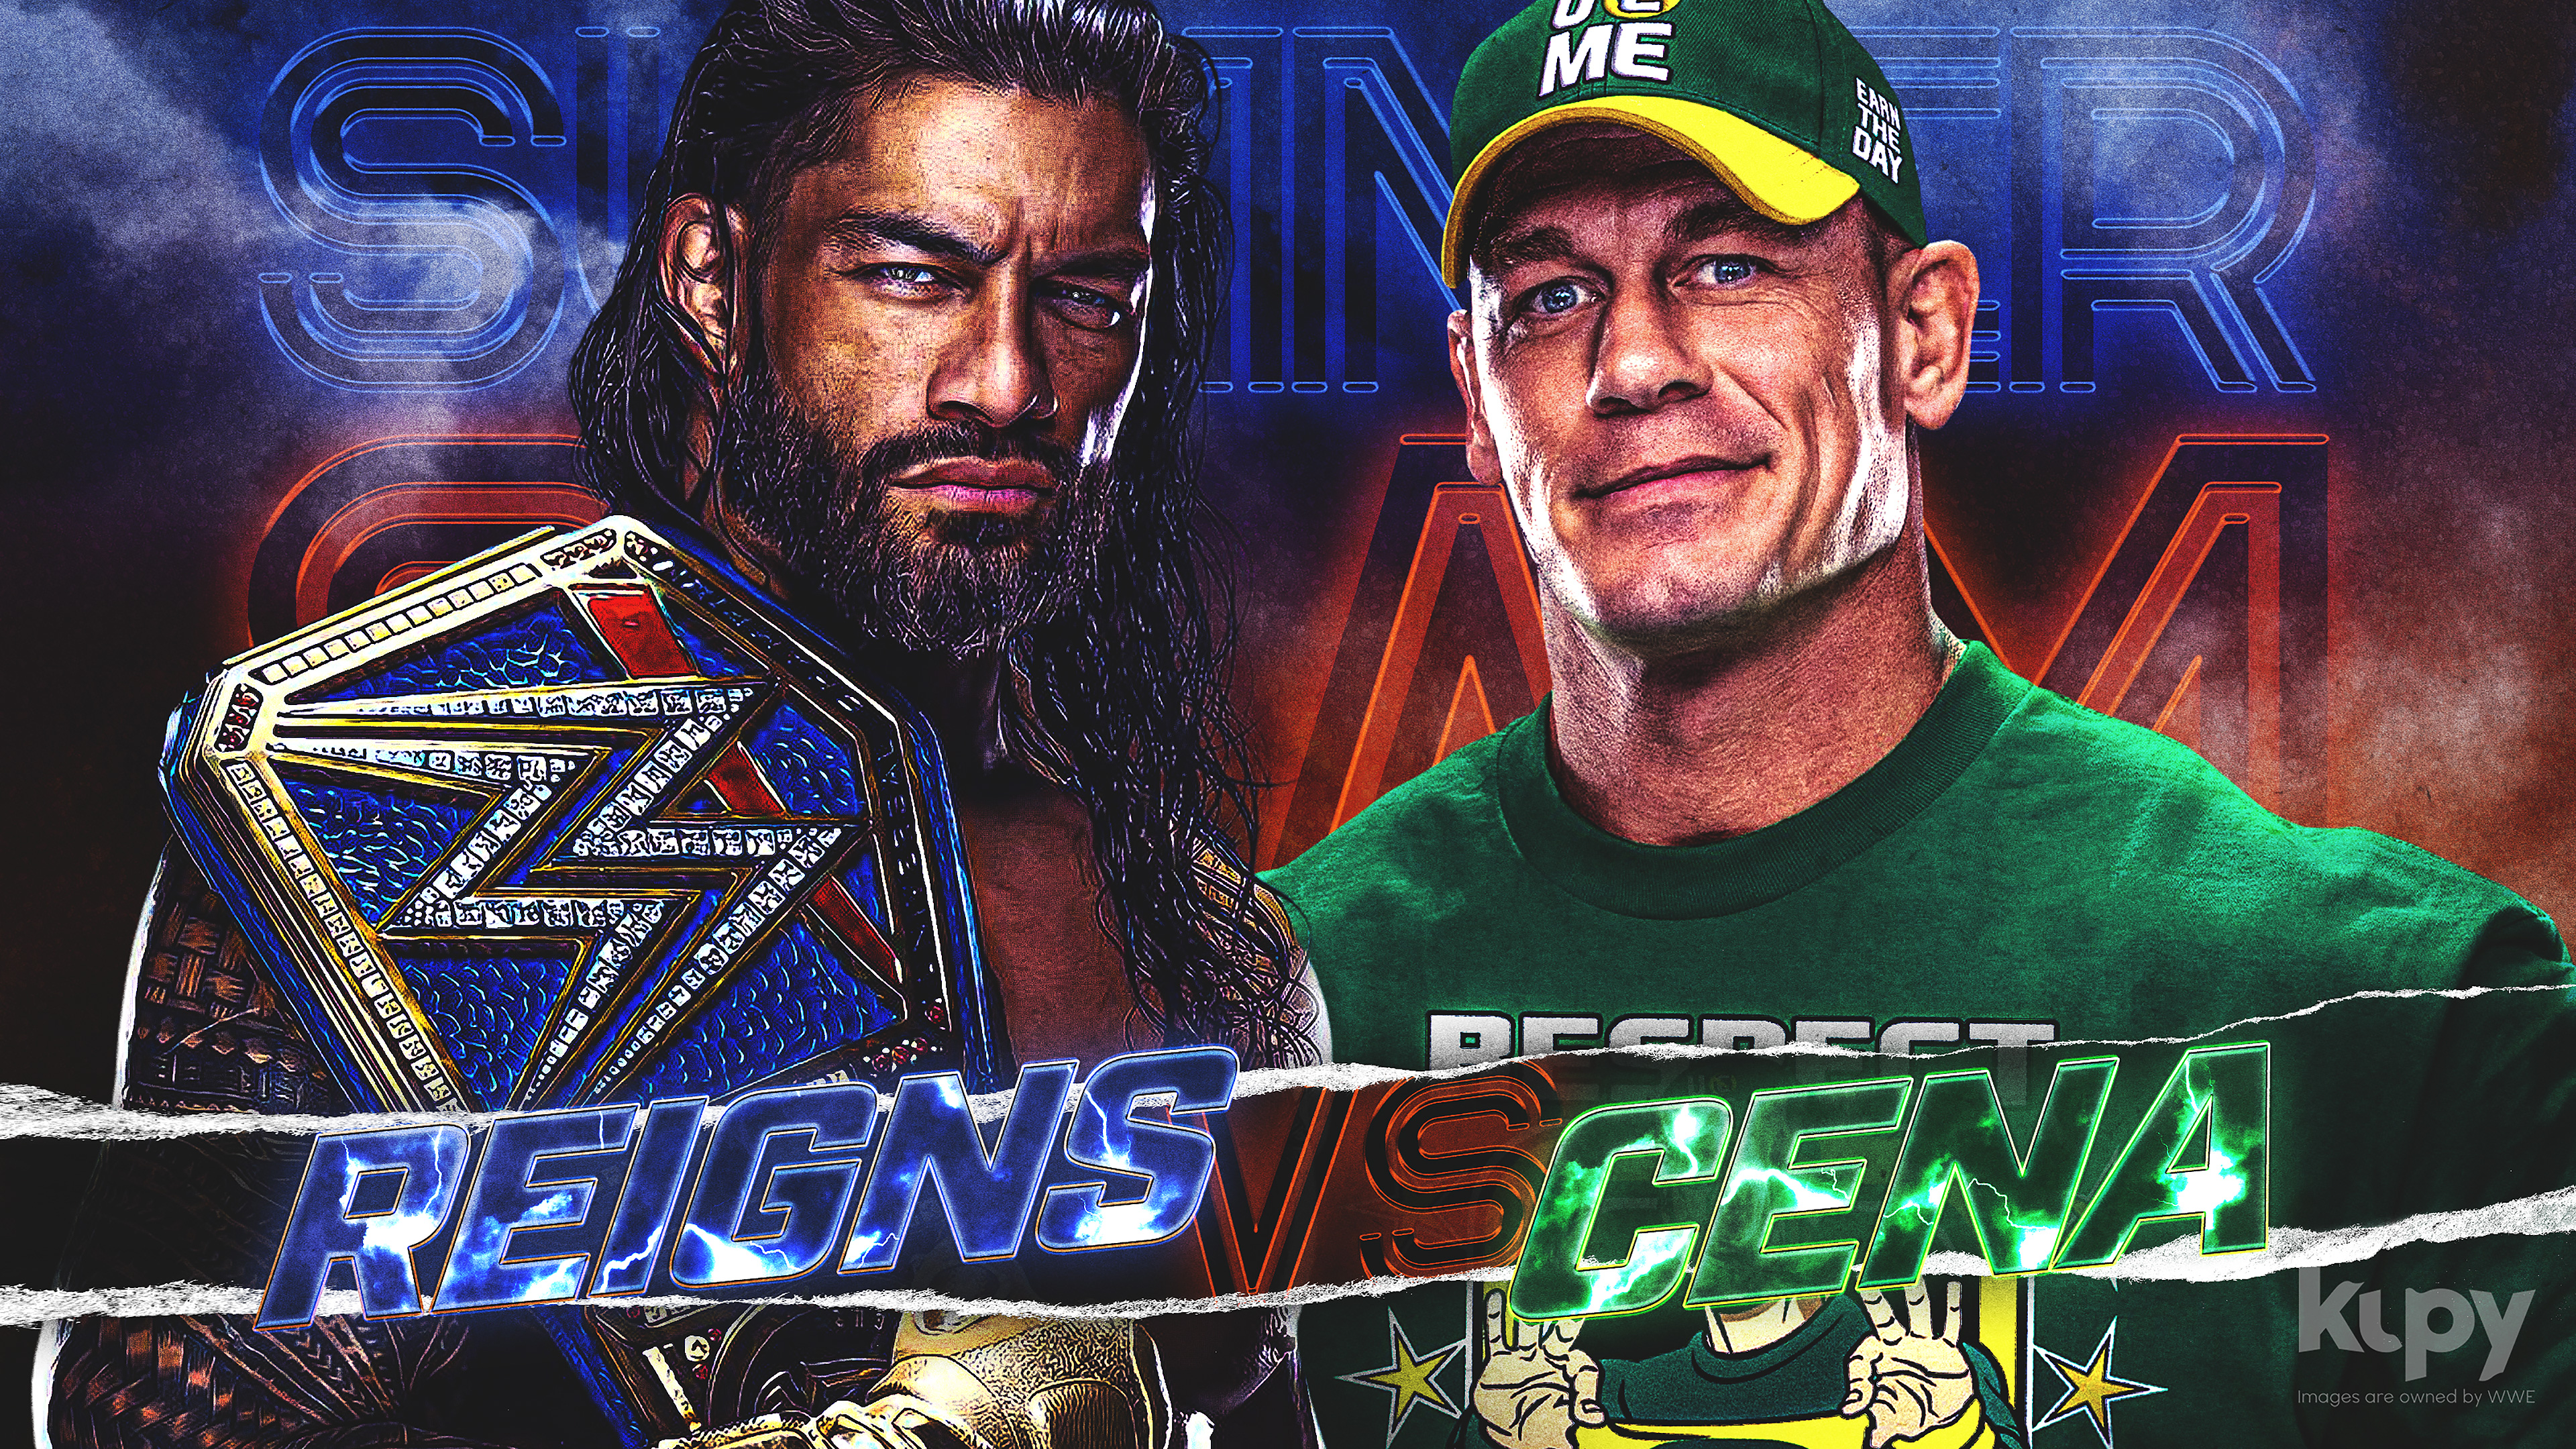 NEW Roman Reigns vs John Cena SummerSlam wallpaper   Kupy